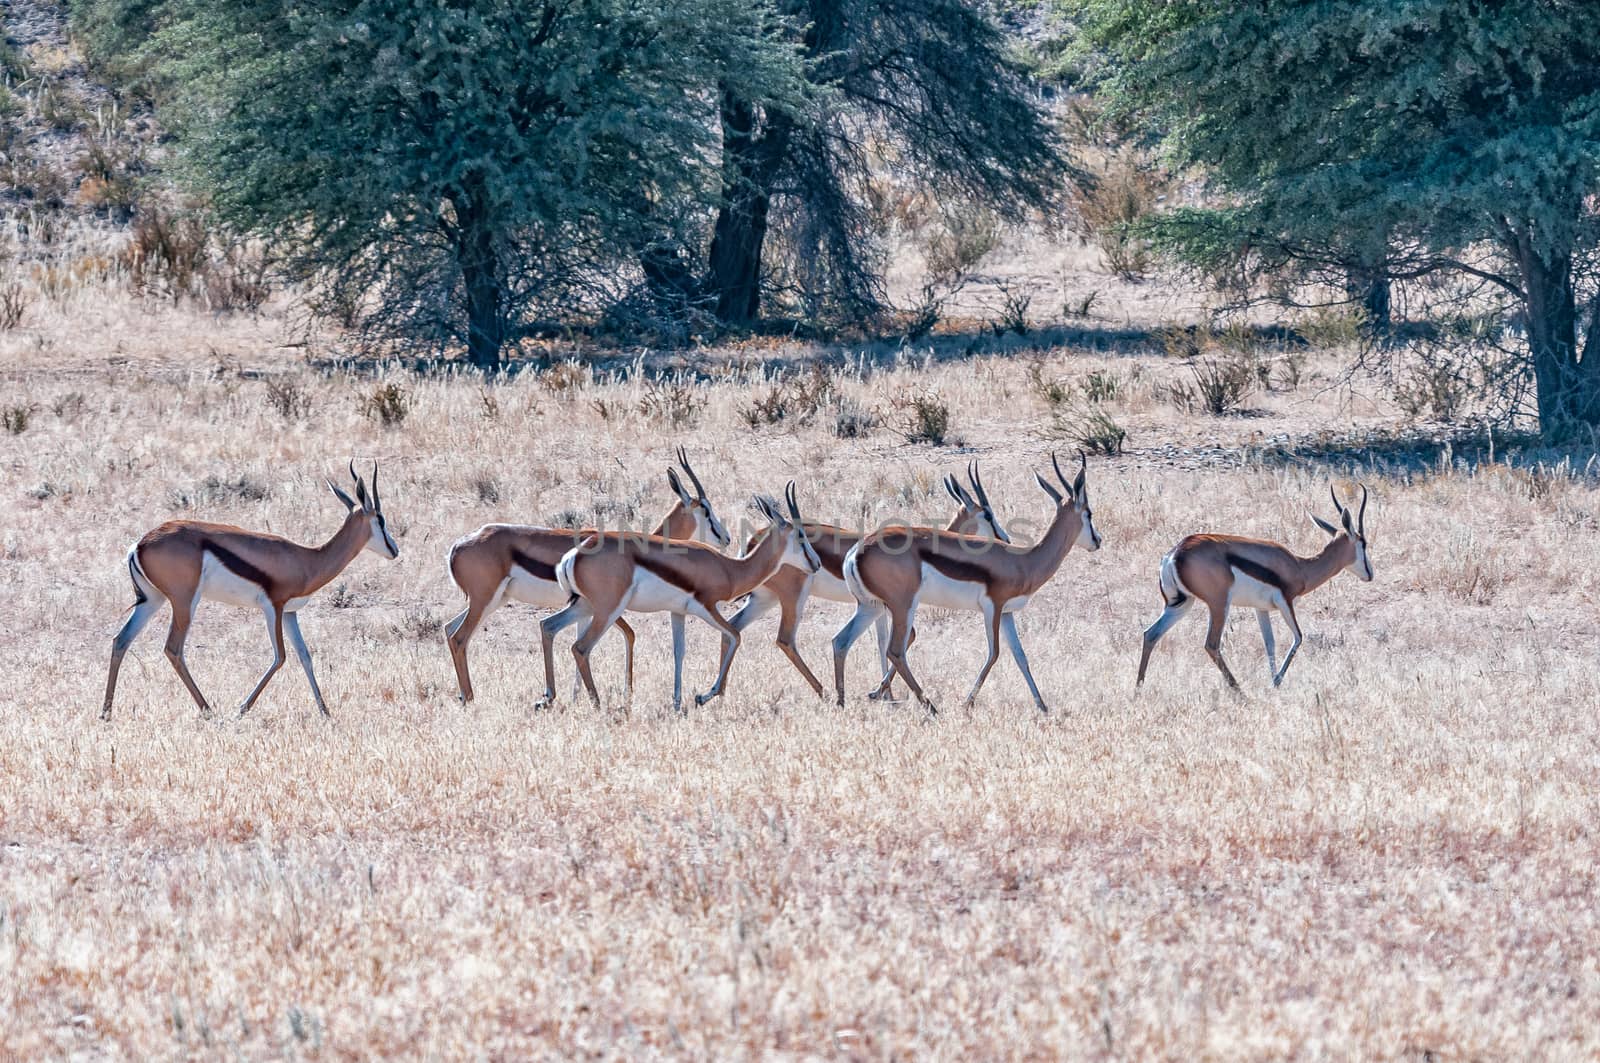 Herd of springbok walking in the arid Kgalagadi by dpreezg